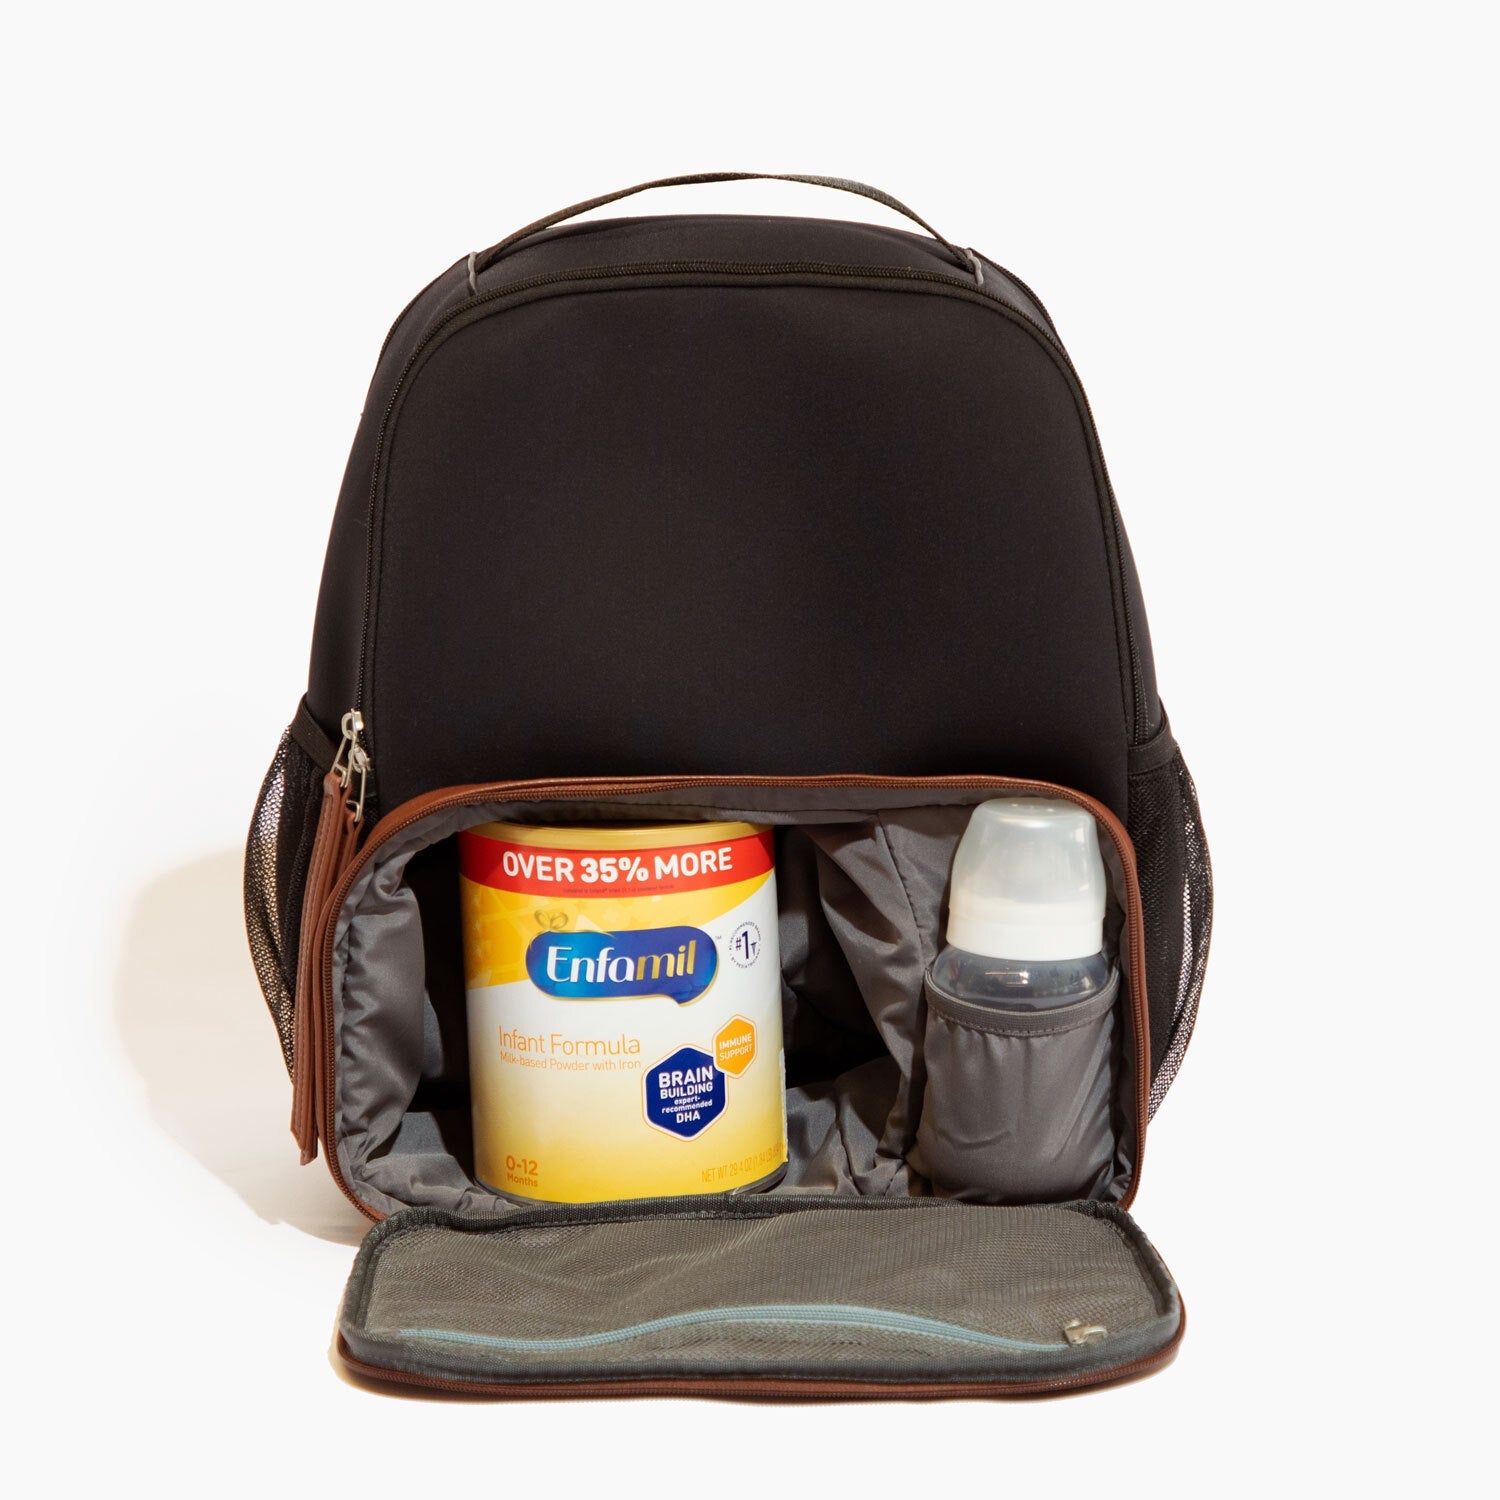 Latte Marseille Breast Pump Diaper Bag | Travel Breast Pump Bag